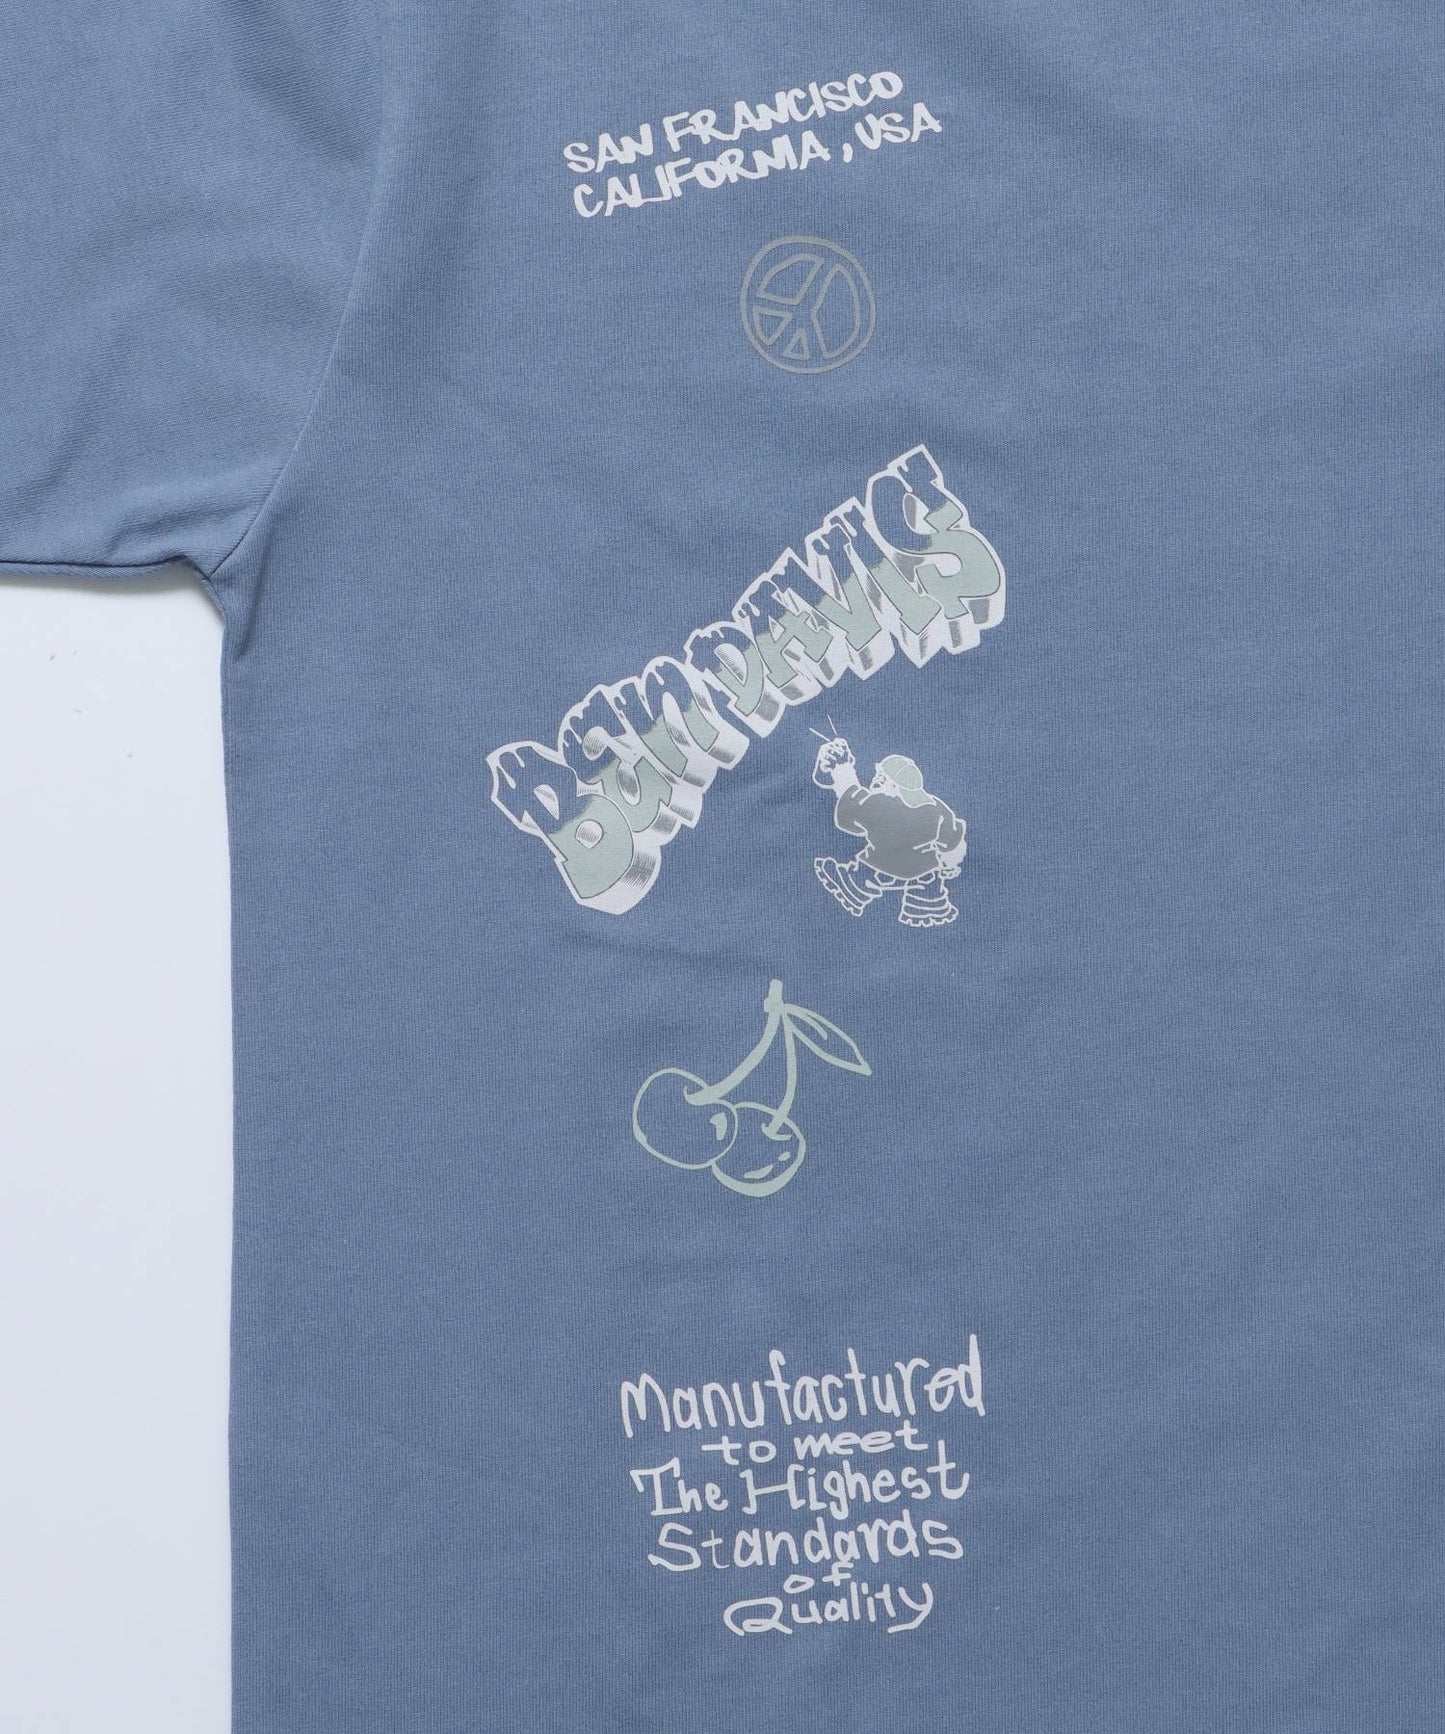 SCRIBBLED TEE / 半袖Tシャツ ロゴ クルーネック オーバーサイズ ブランドロゴ ブルーグレー